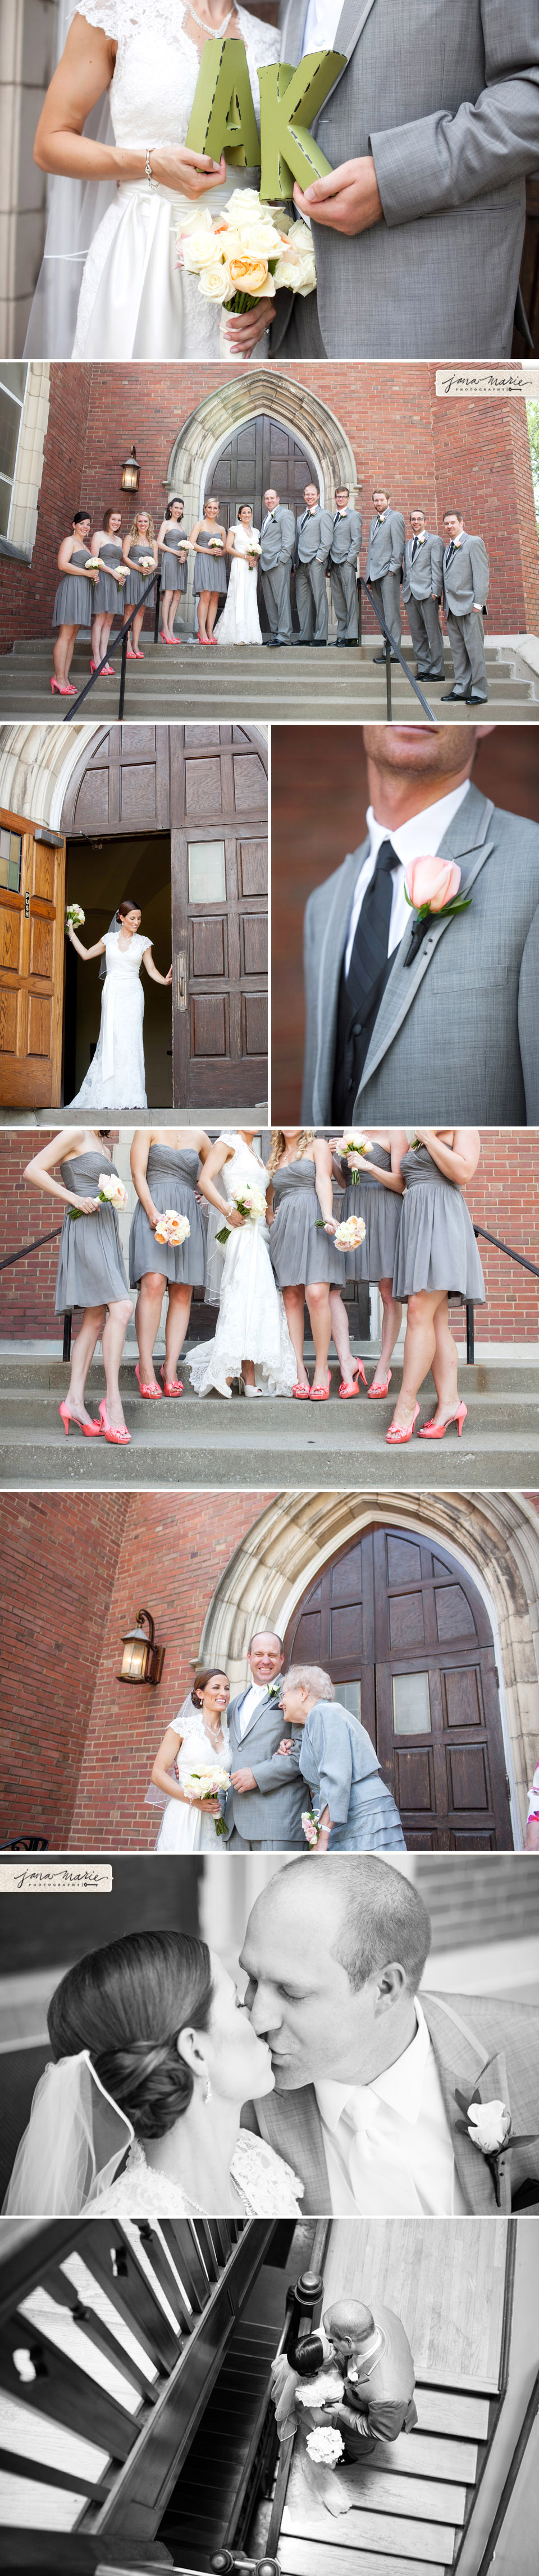 Peach high heels, bridesmaids, Church doors, Chapel steps, Wedding day, bridal party photos